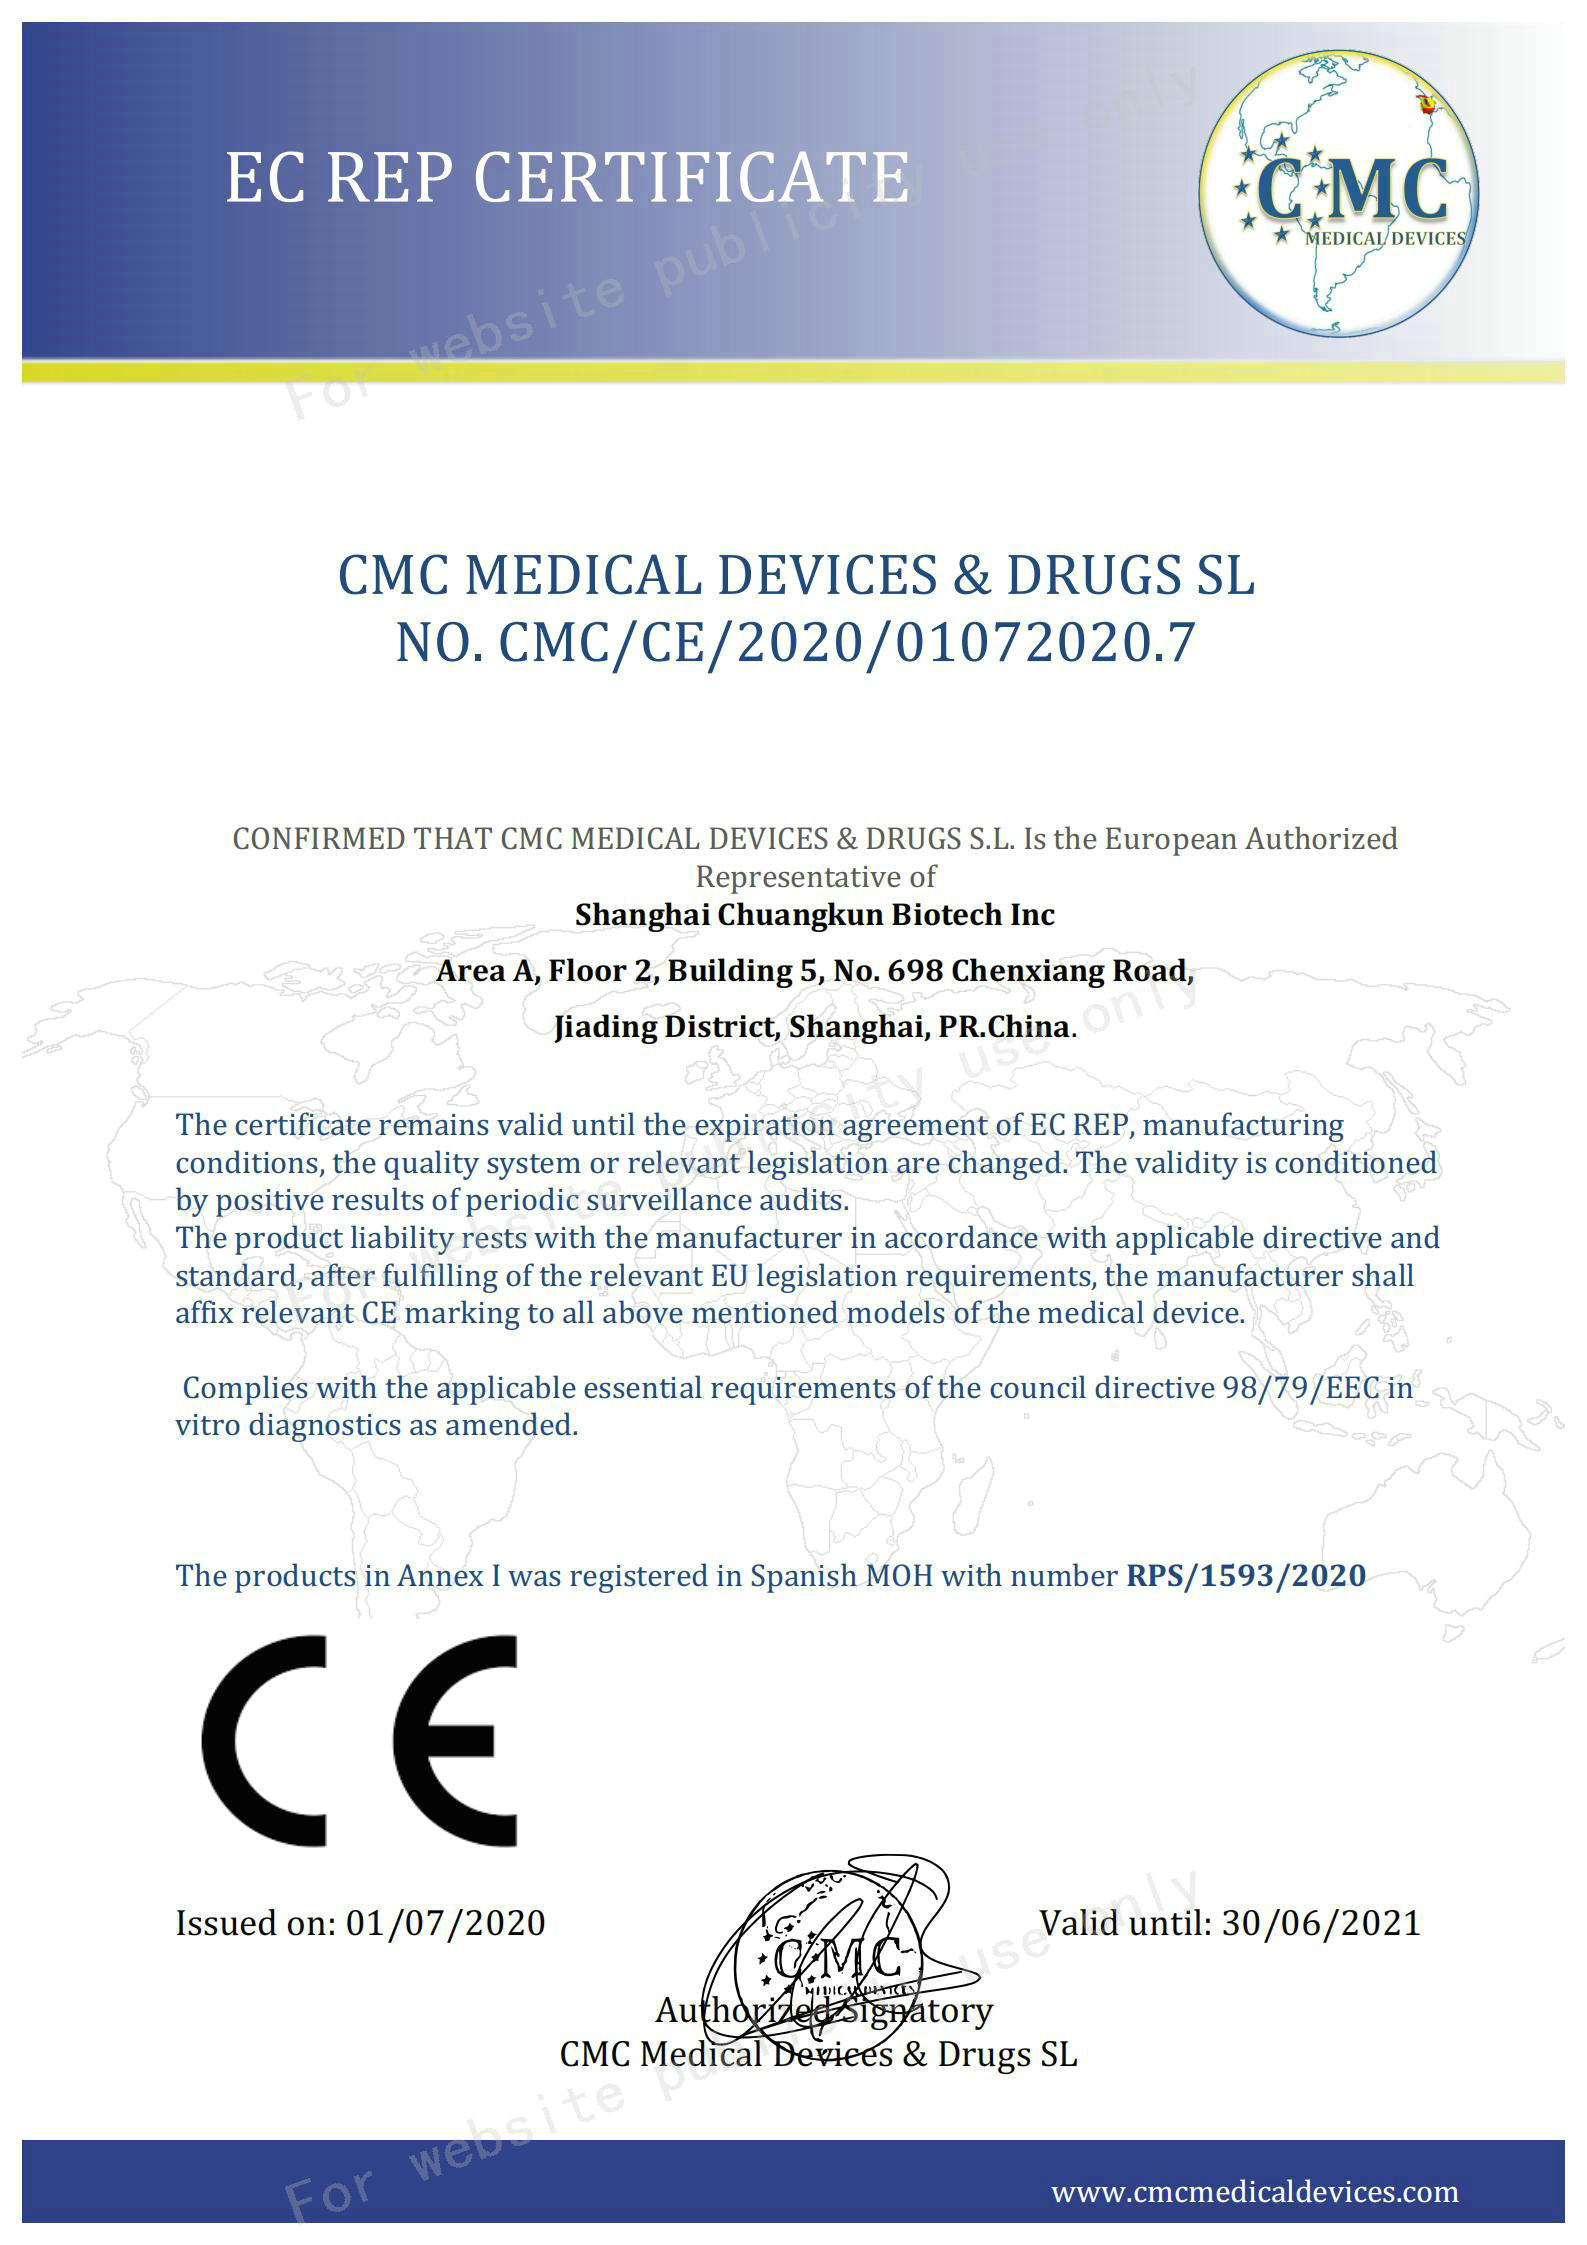 02 halaman sertifikat CE1